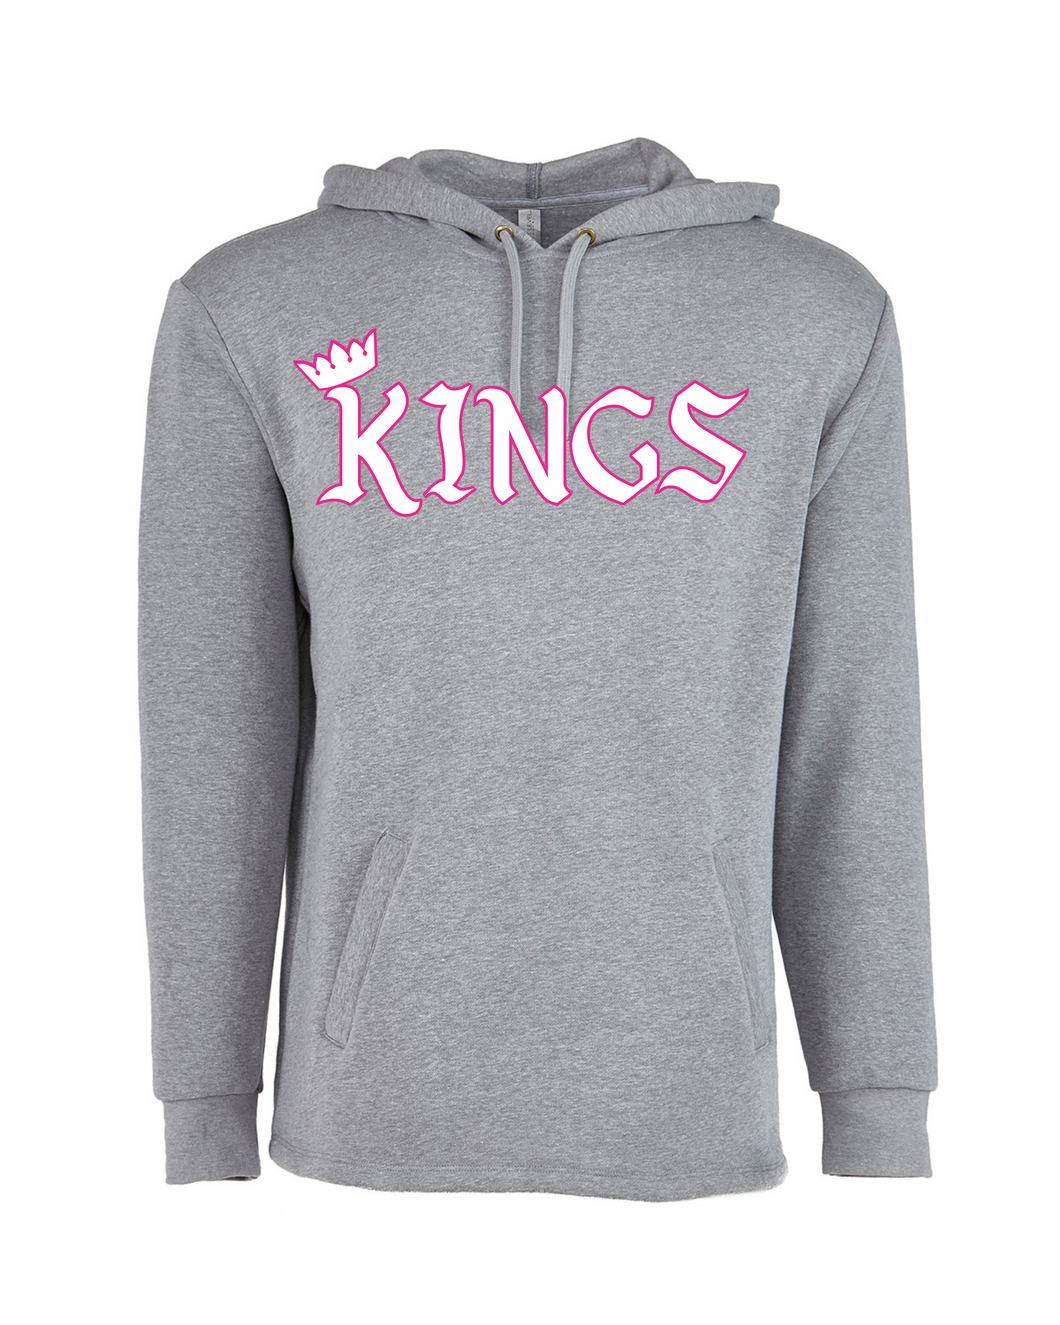 ATL-KINGS-315-2 - Next Level Ladies Malibu Welt Pocket Hooded Sweatshirt - KINGS Logo